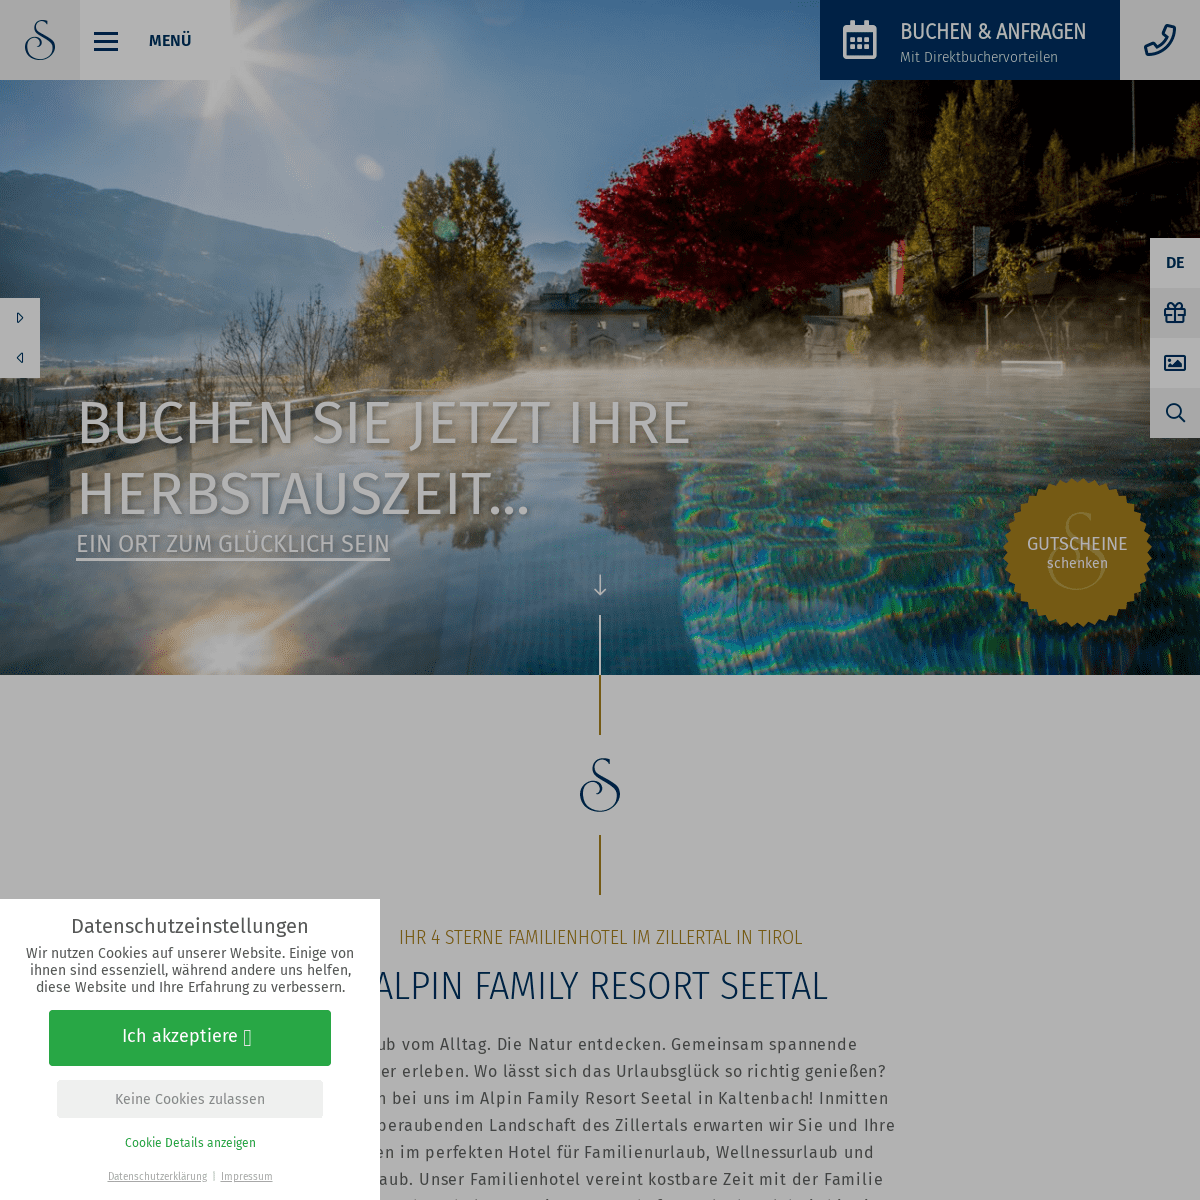 Ihr 4 Sterne Familienhotel im Zillertal in Tirol - Alpin Family Resort Seetal